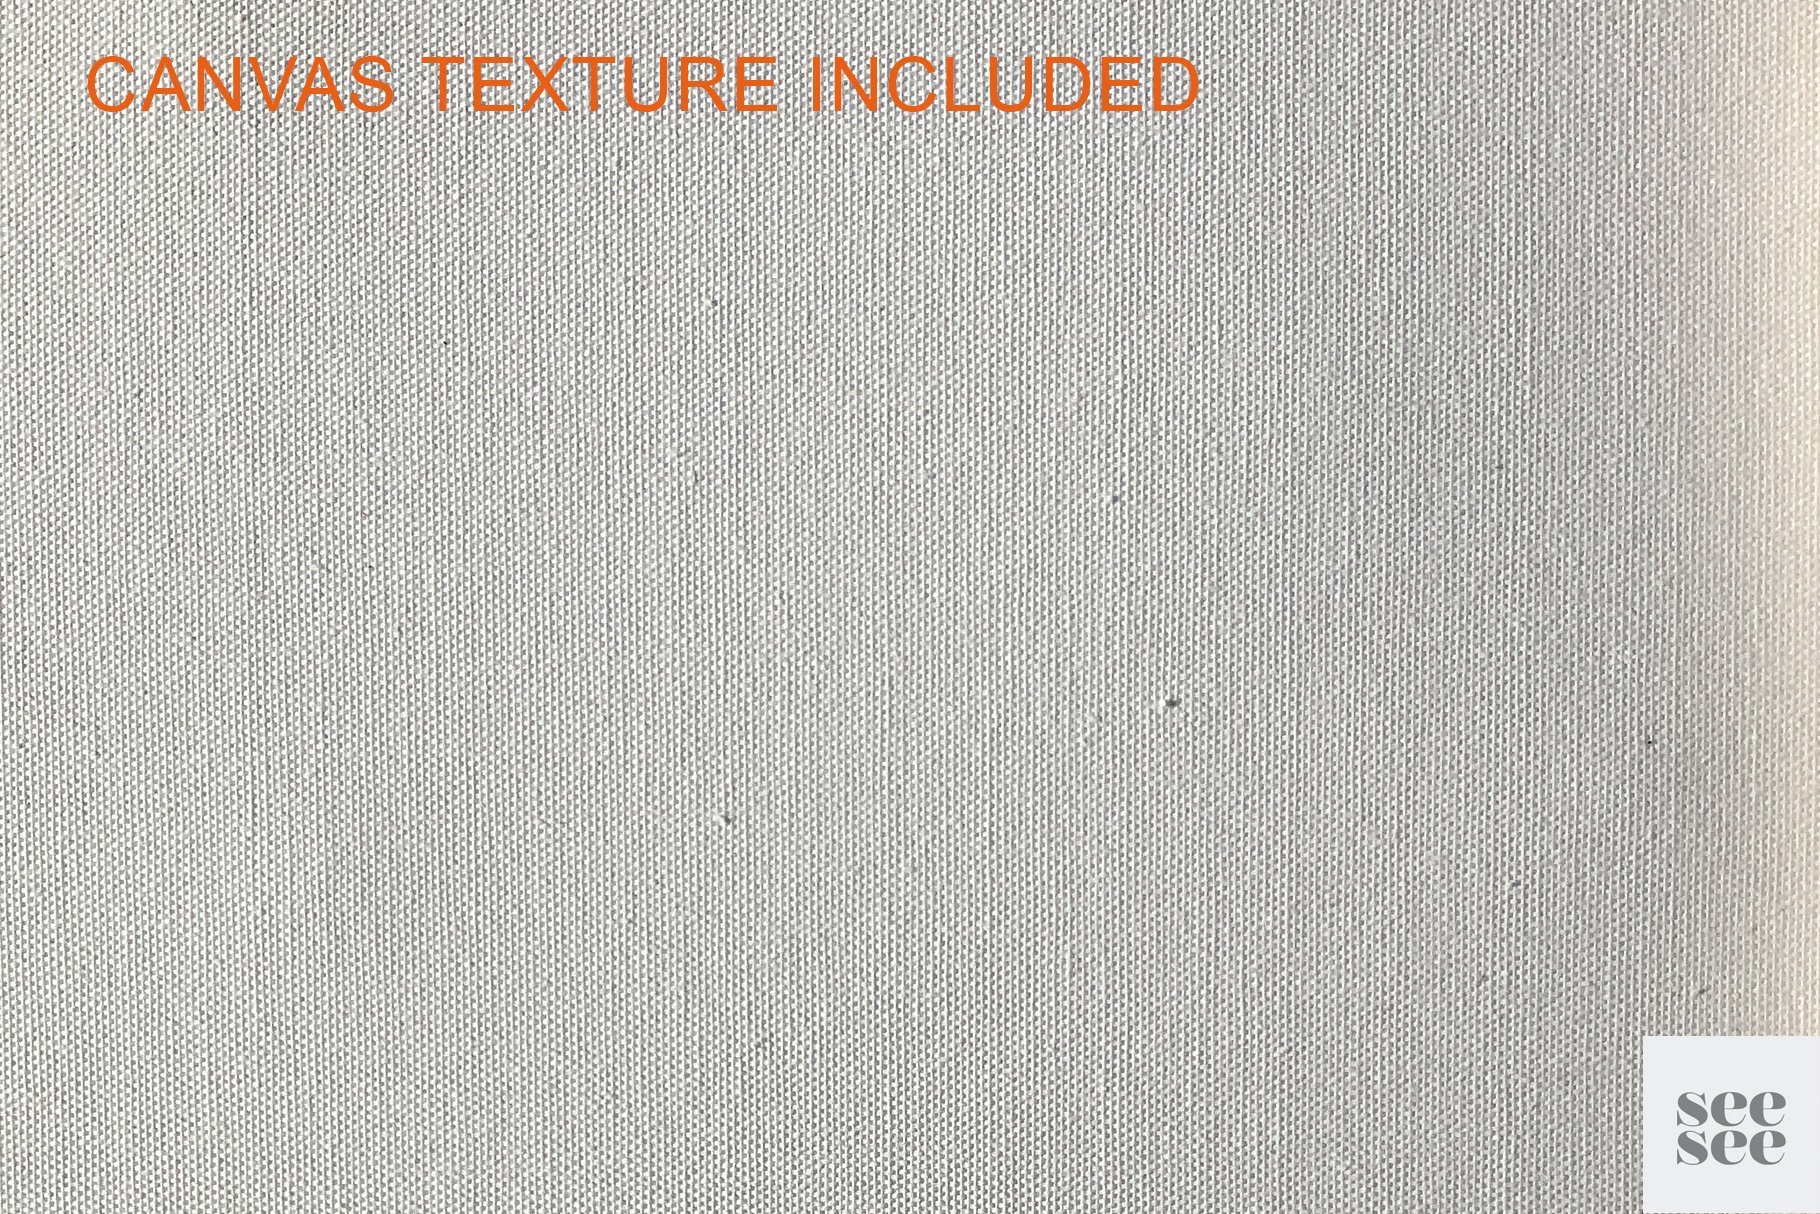 Procreate_Oil_Brush_Set__Texture